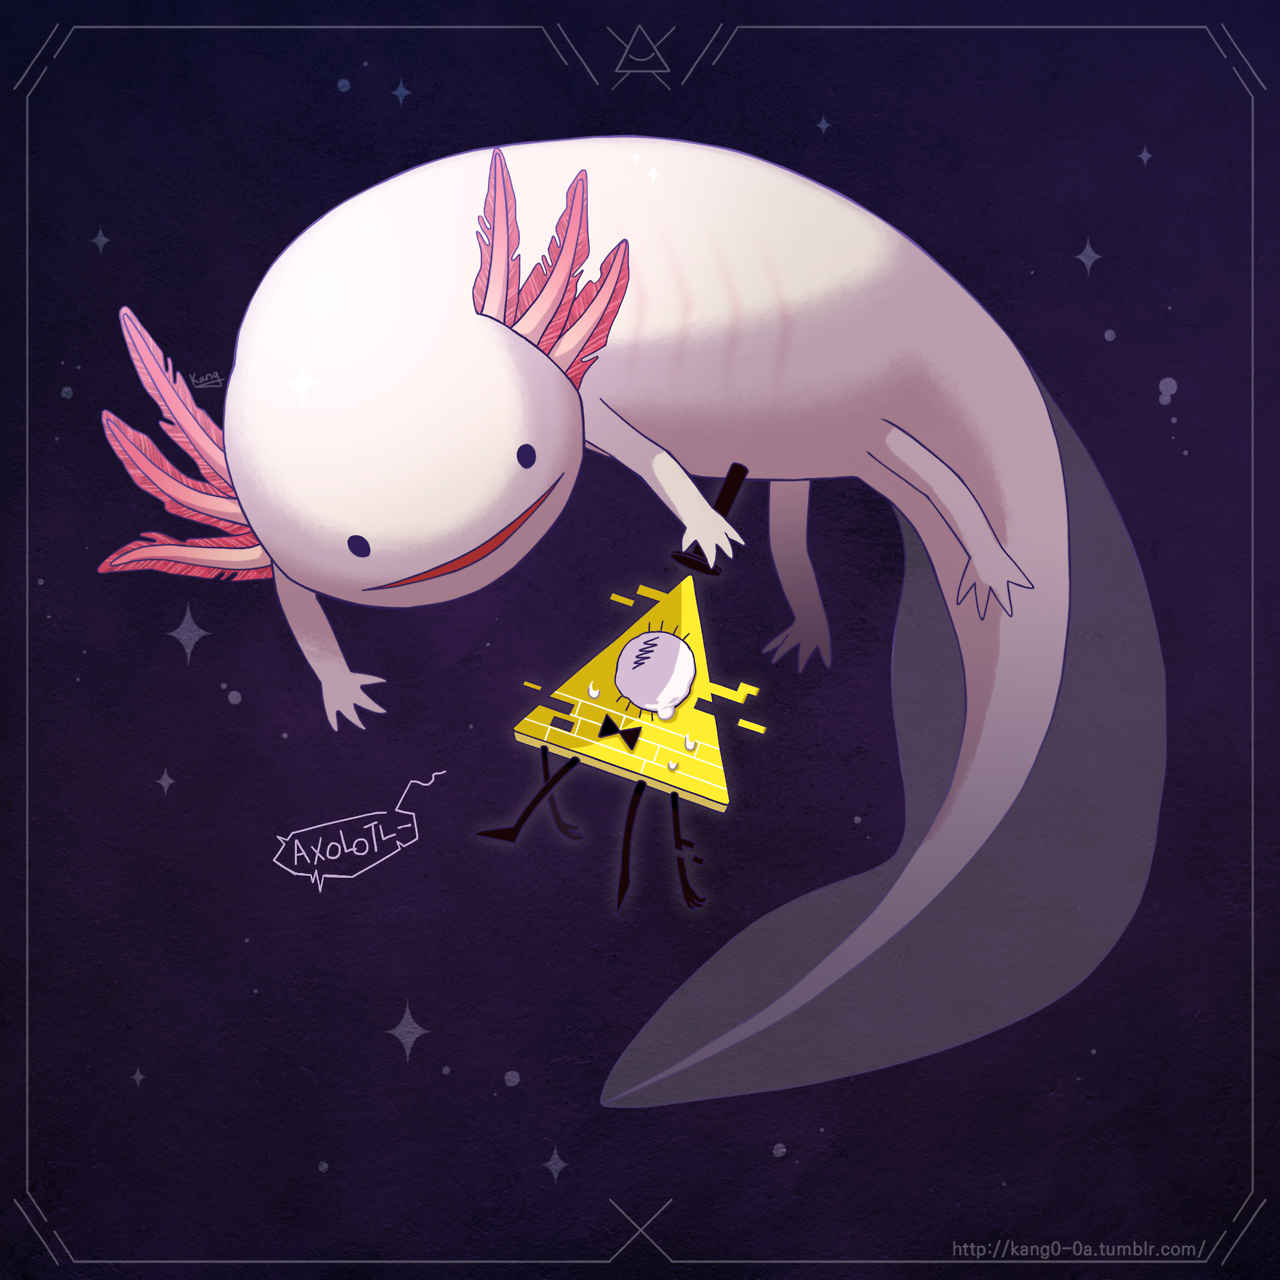 gravity falls axolotl plush